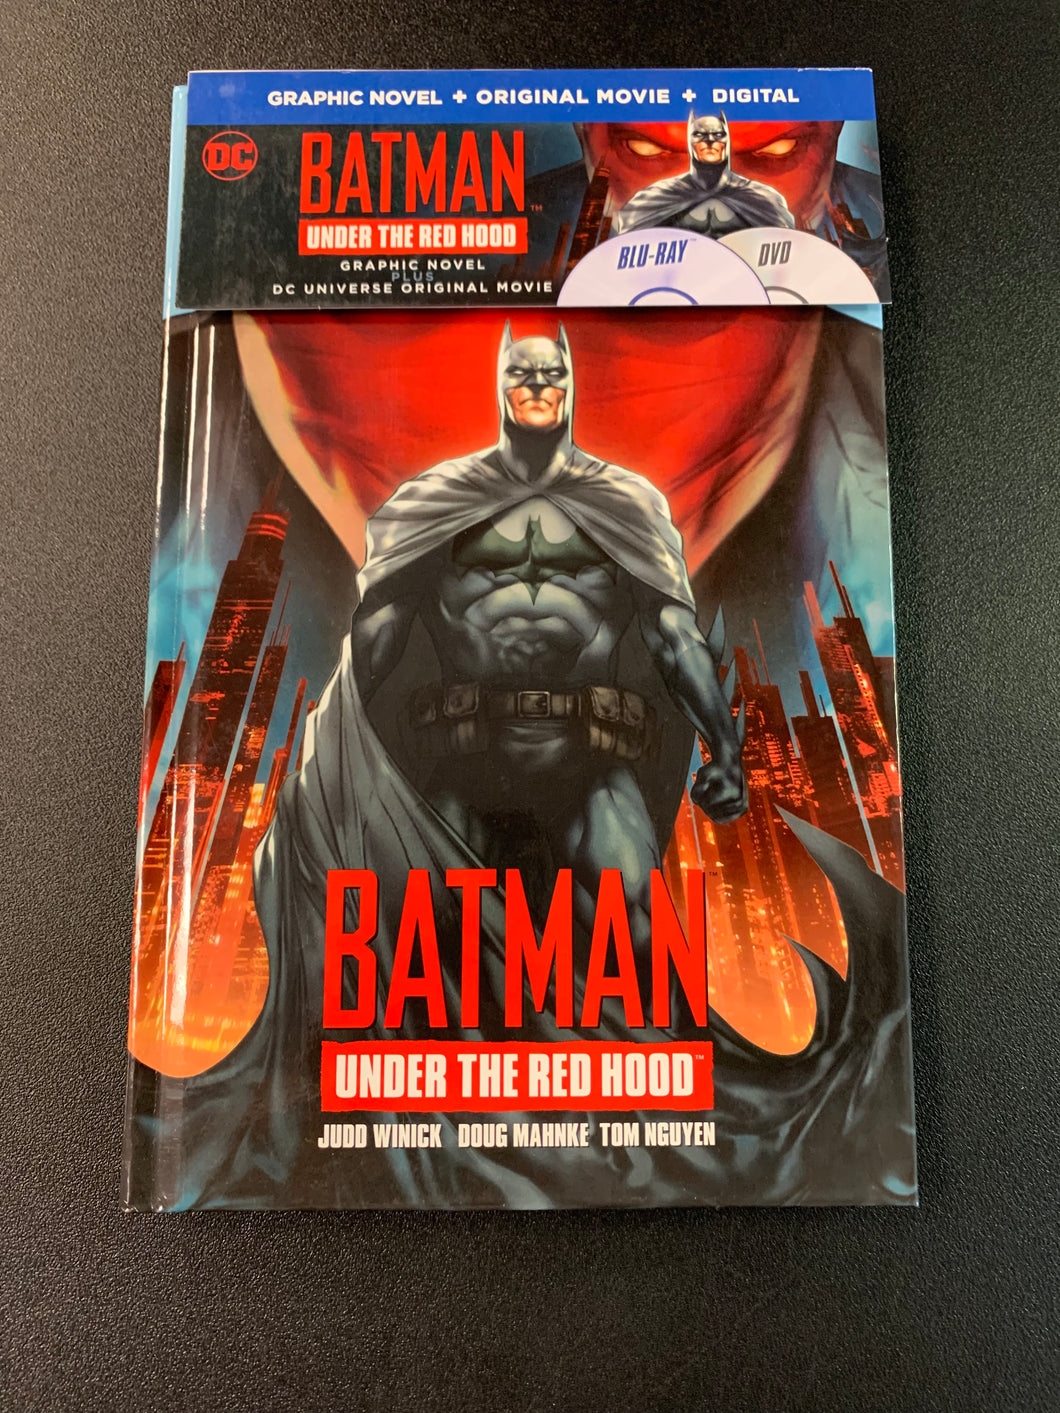 BATMAN UNDER THE RED HOOD NOVEL MOVIE BLU-RAY DVD PREOWNED